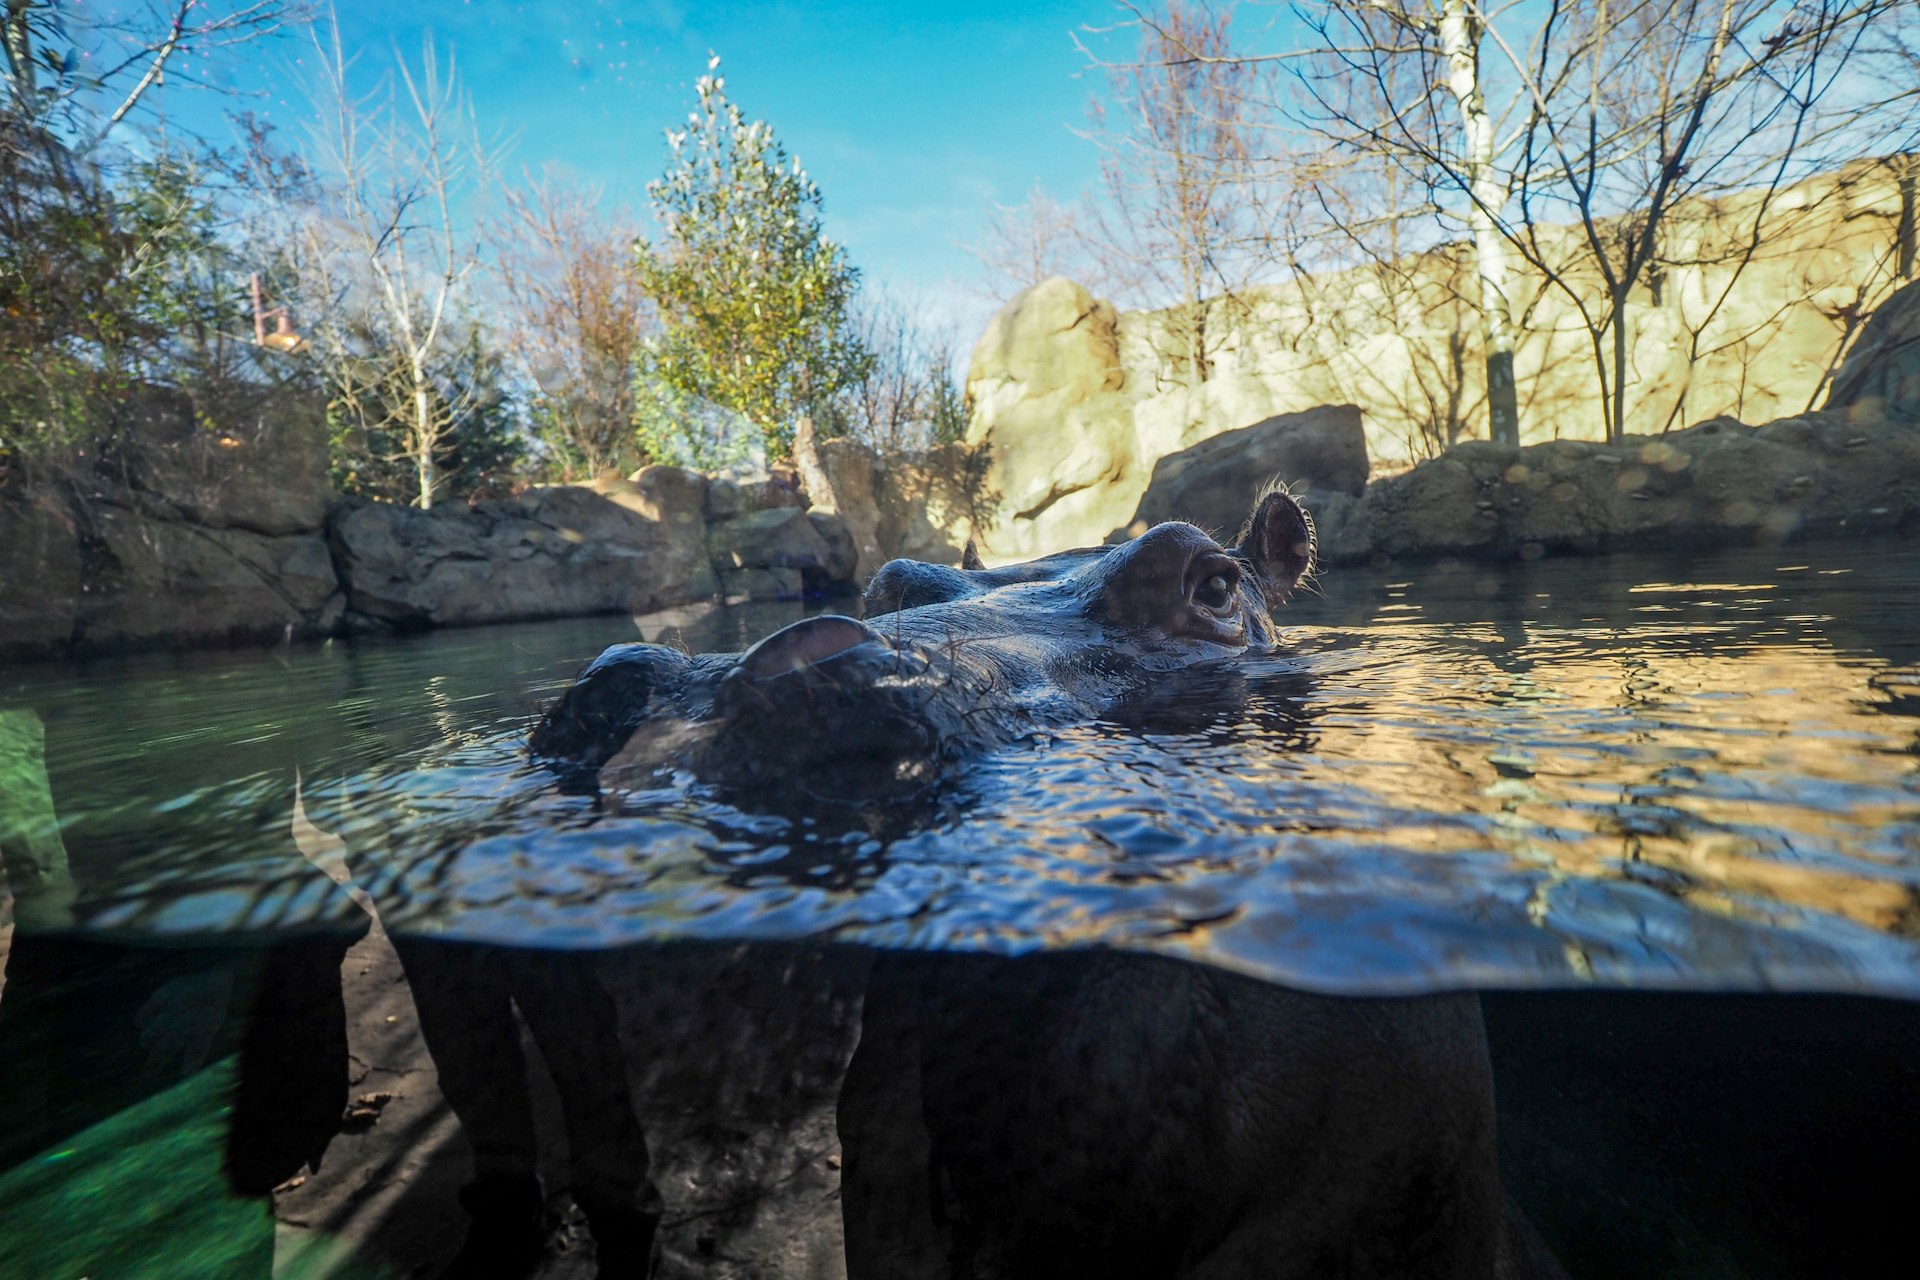 Fiona the hippo at the Cincinnati Zoo & Botanical Garden